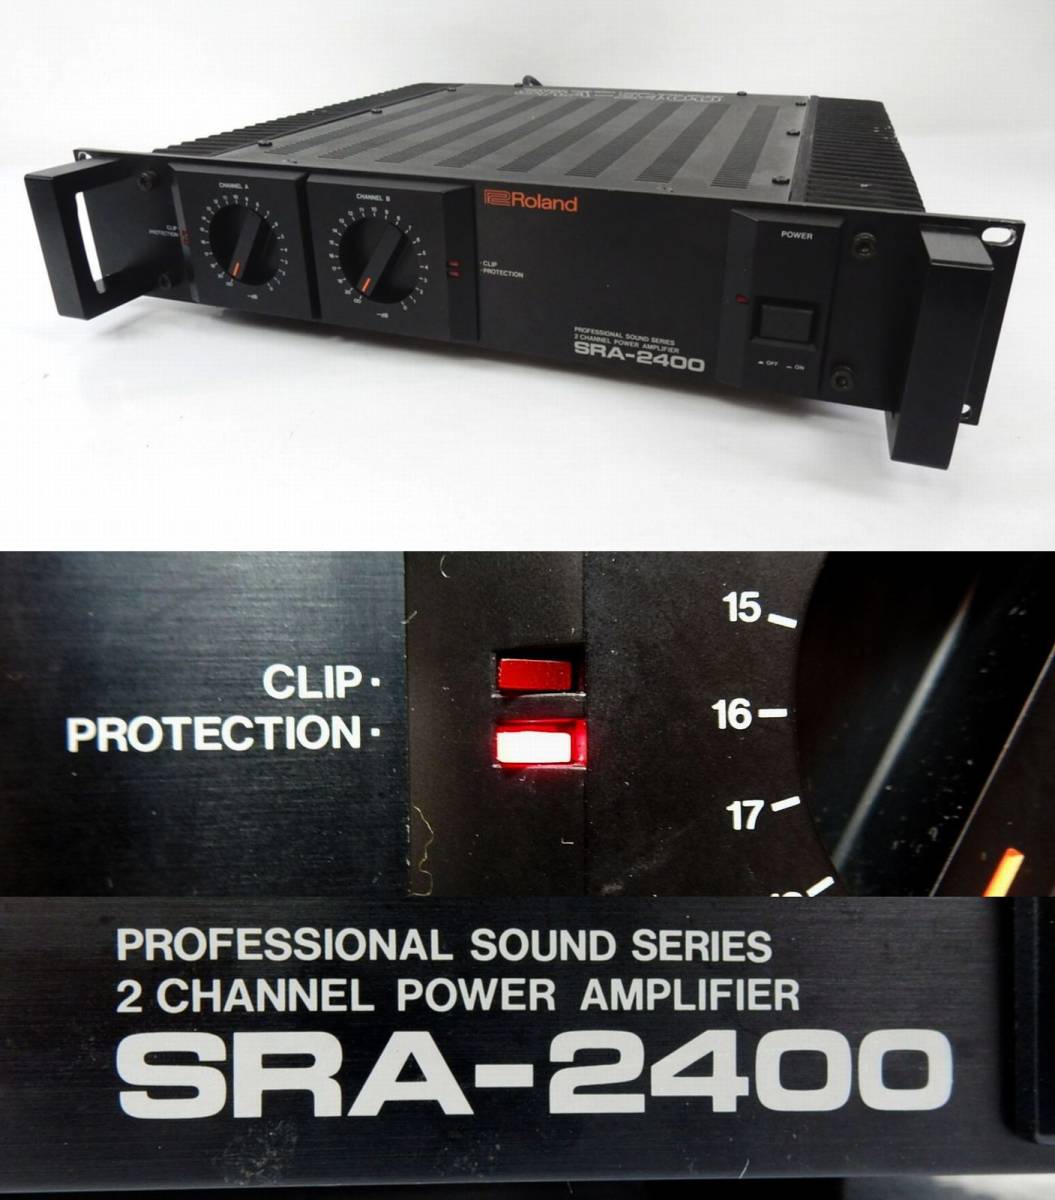 【Roland】ローランド PROFESSIONAL SOUND SERIES 2 CHANNEL POWER AMPLIFIER パワーアンプ SRA-2400 通電確認のみ 中古品 JUNK 返品不可 _画像1